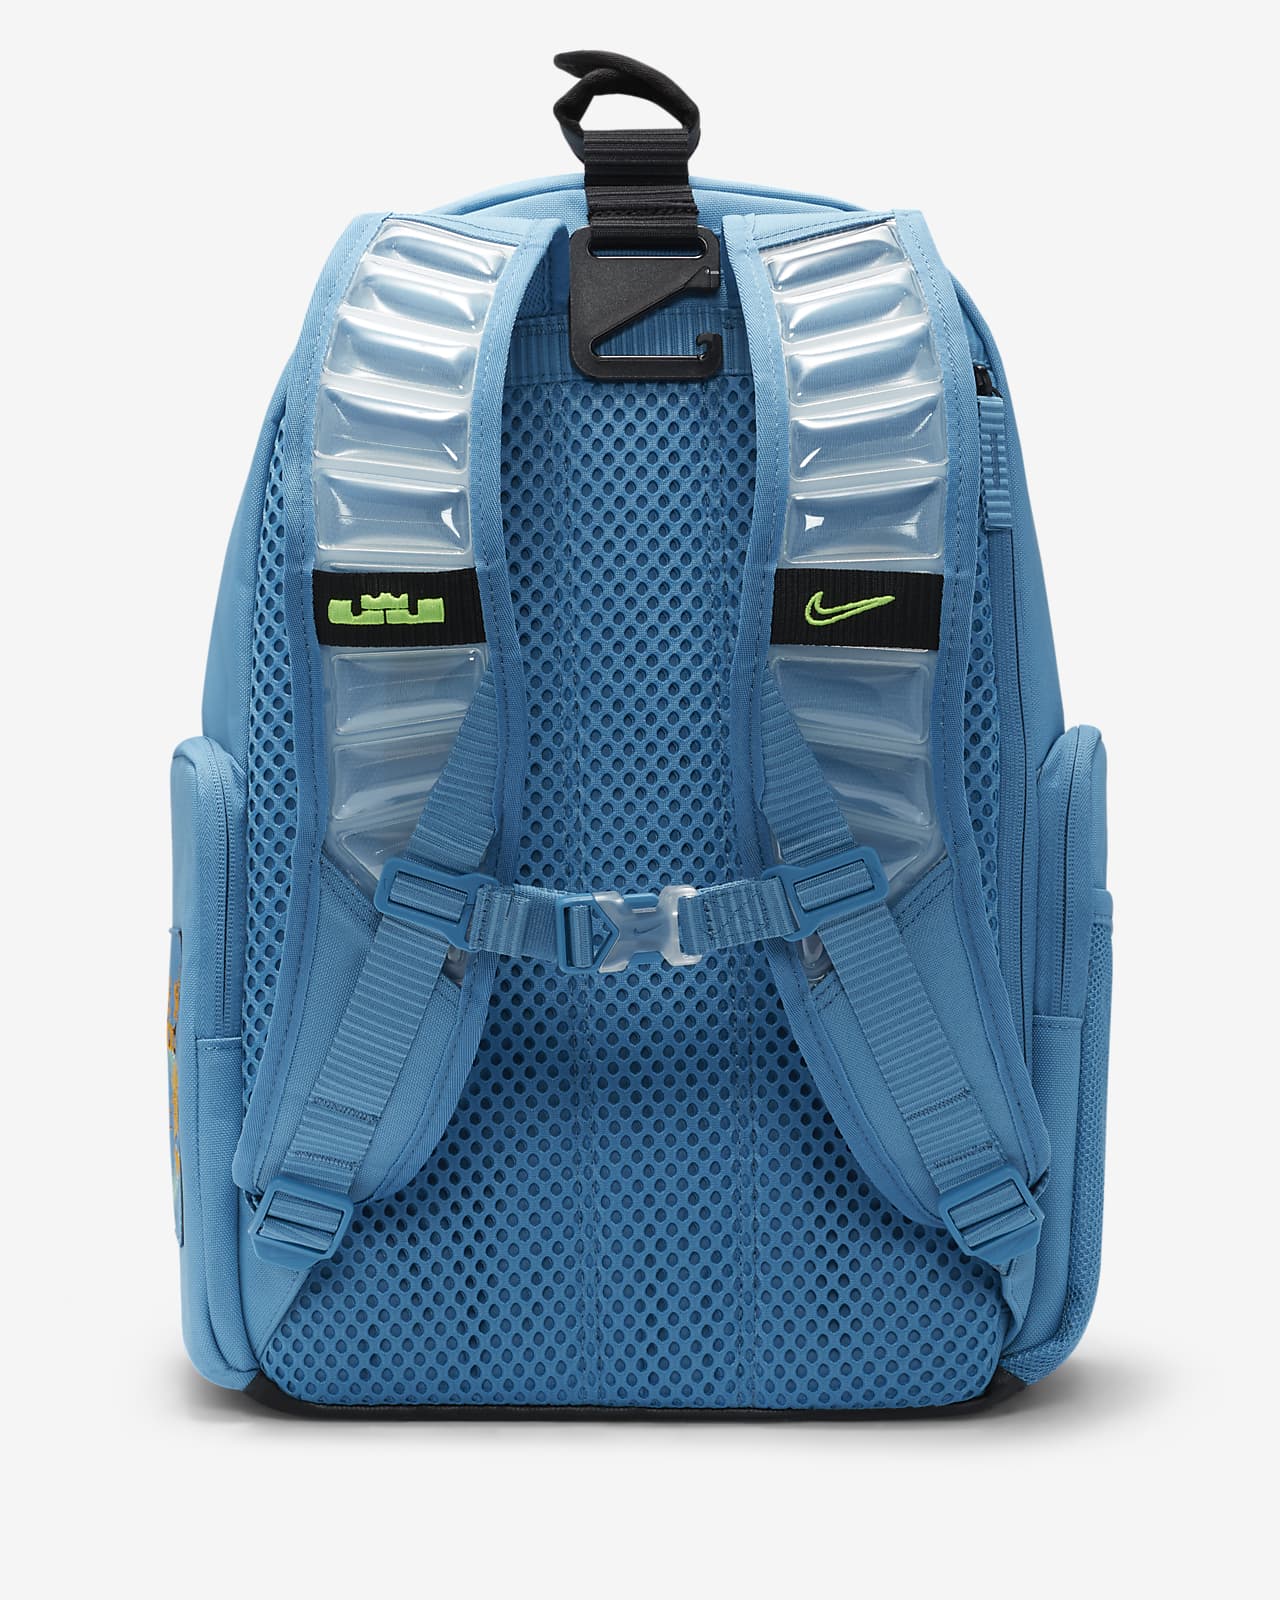 Nike Air Elemental Backpack with Accessory - Jarir Bookstore KSA